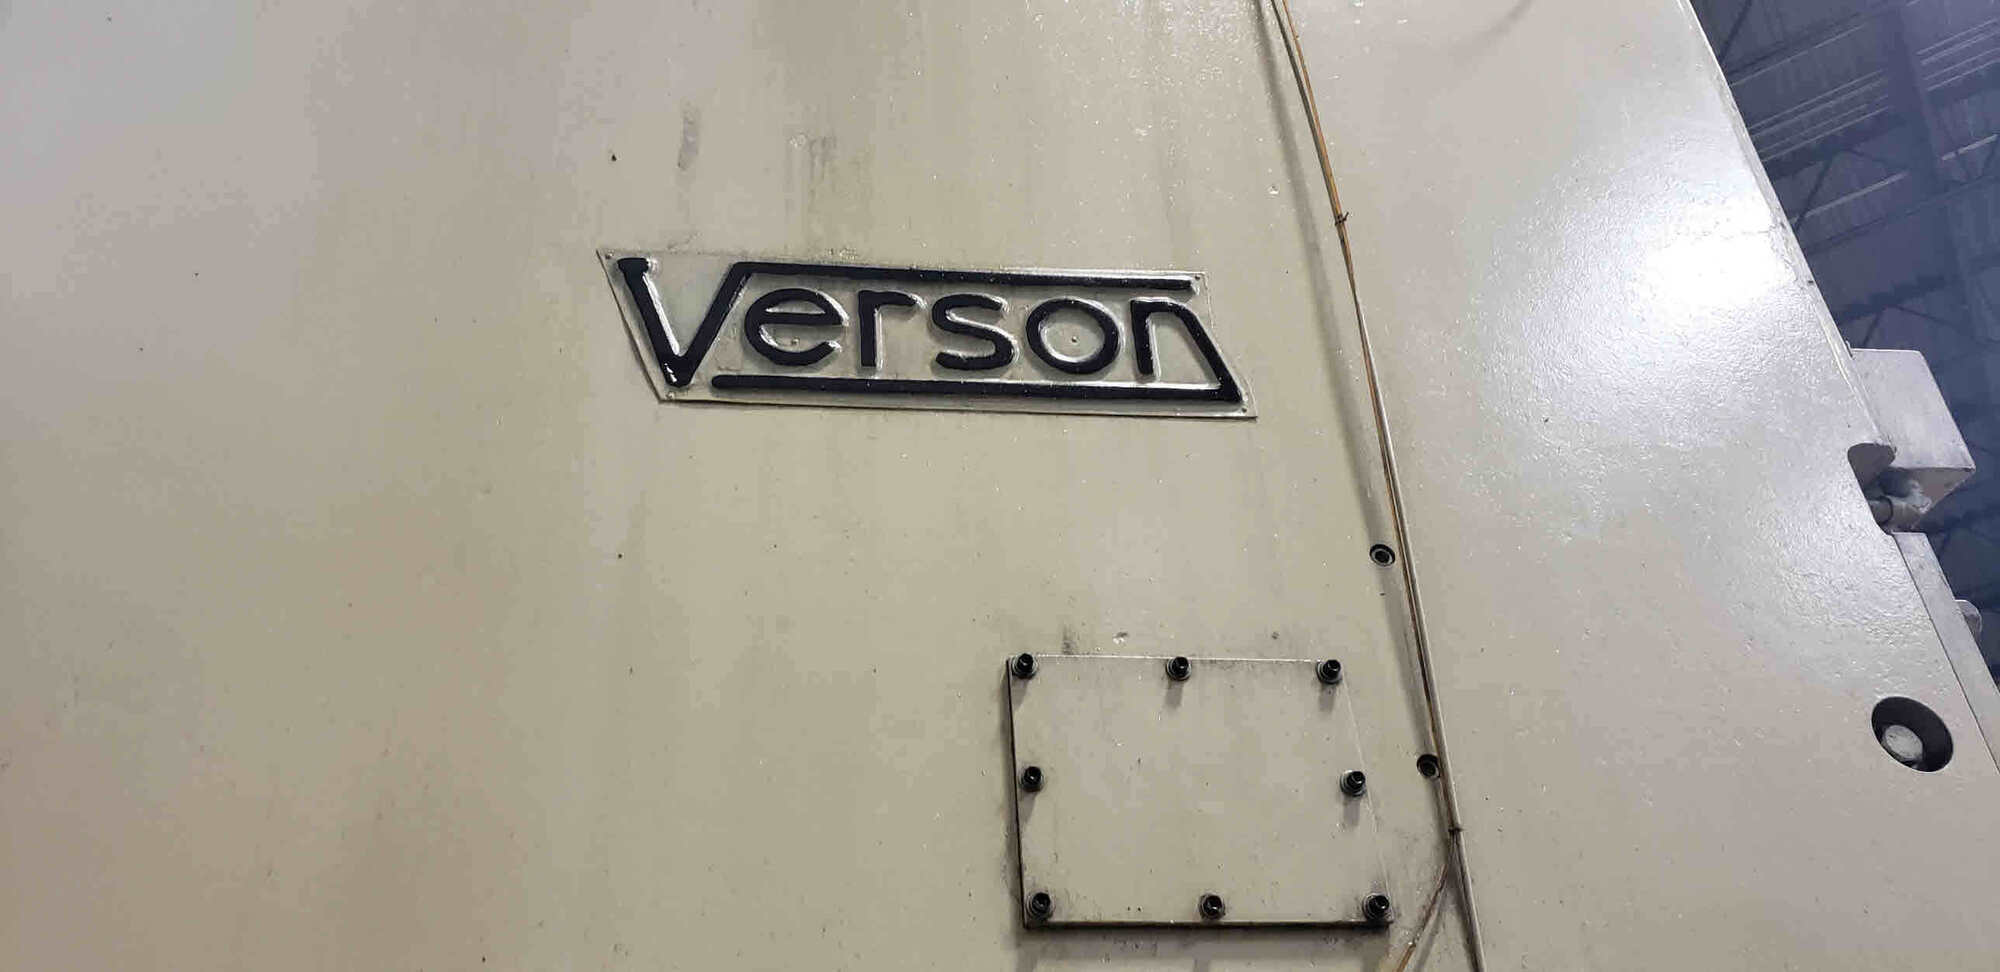 VERSON E17539A C-Frame Presses | PressTrader Limited